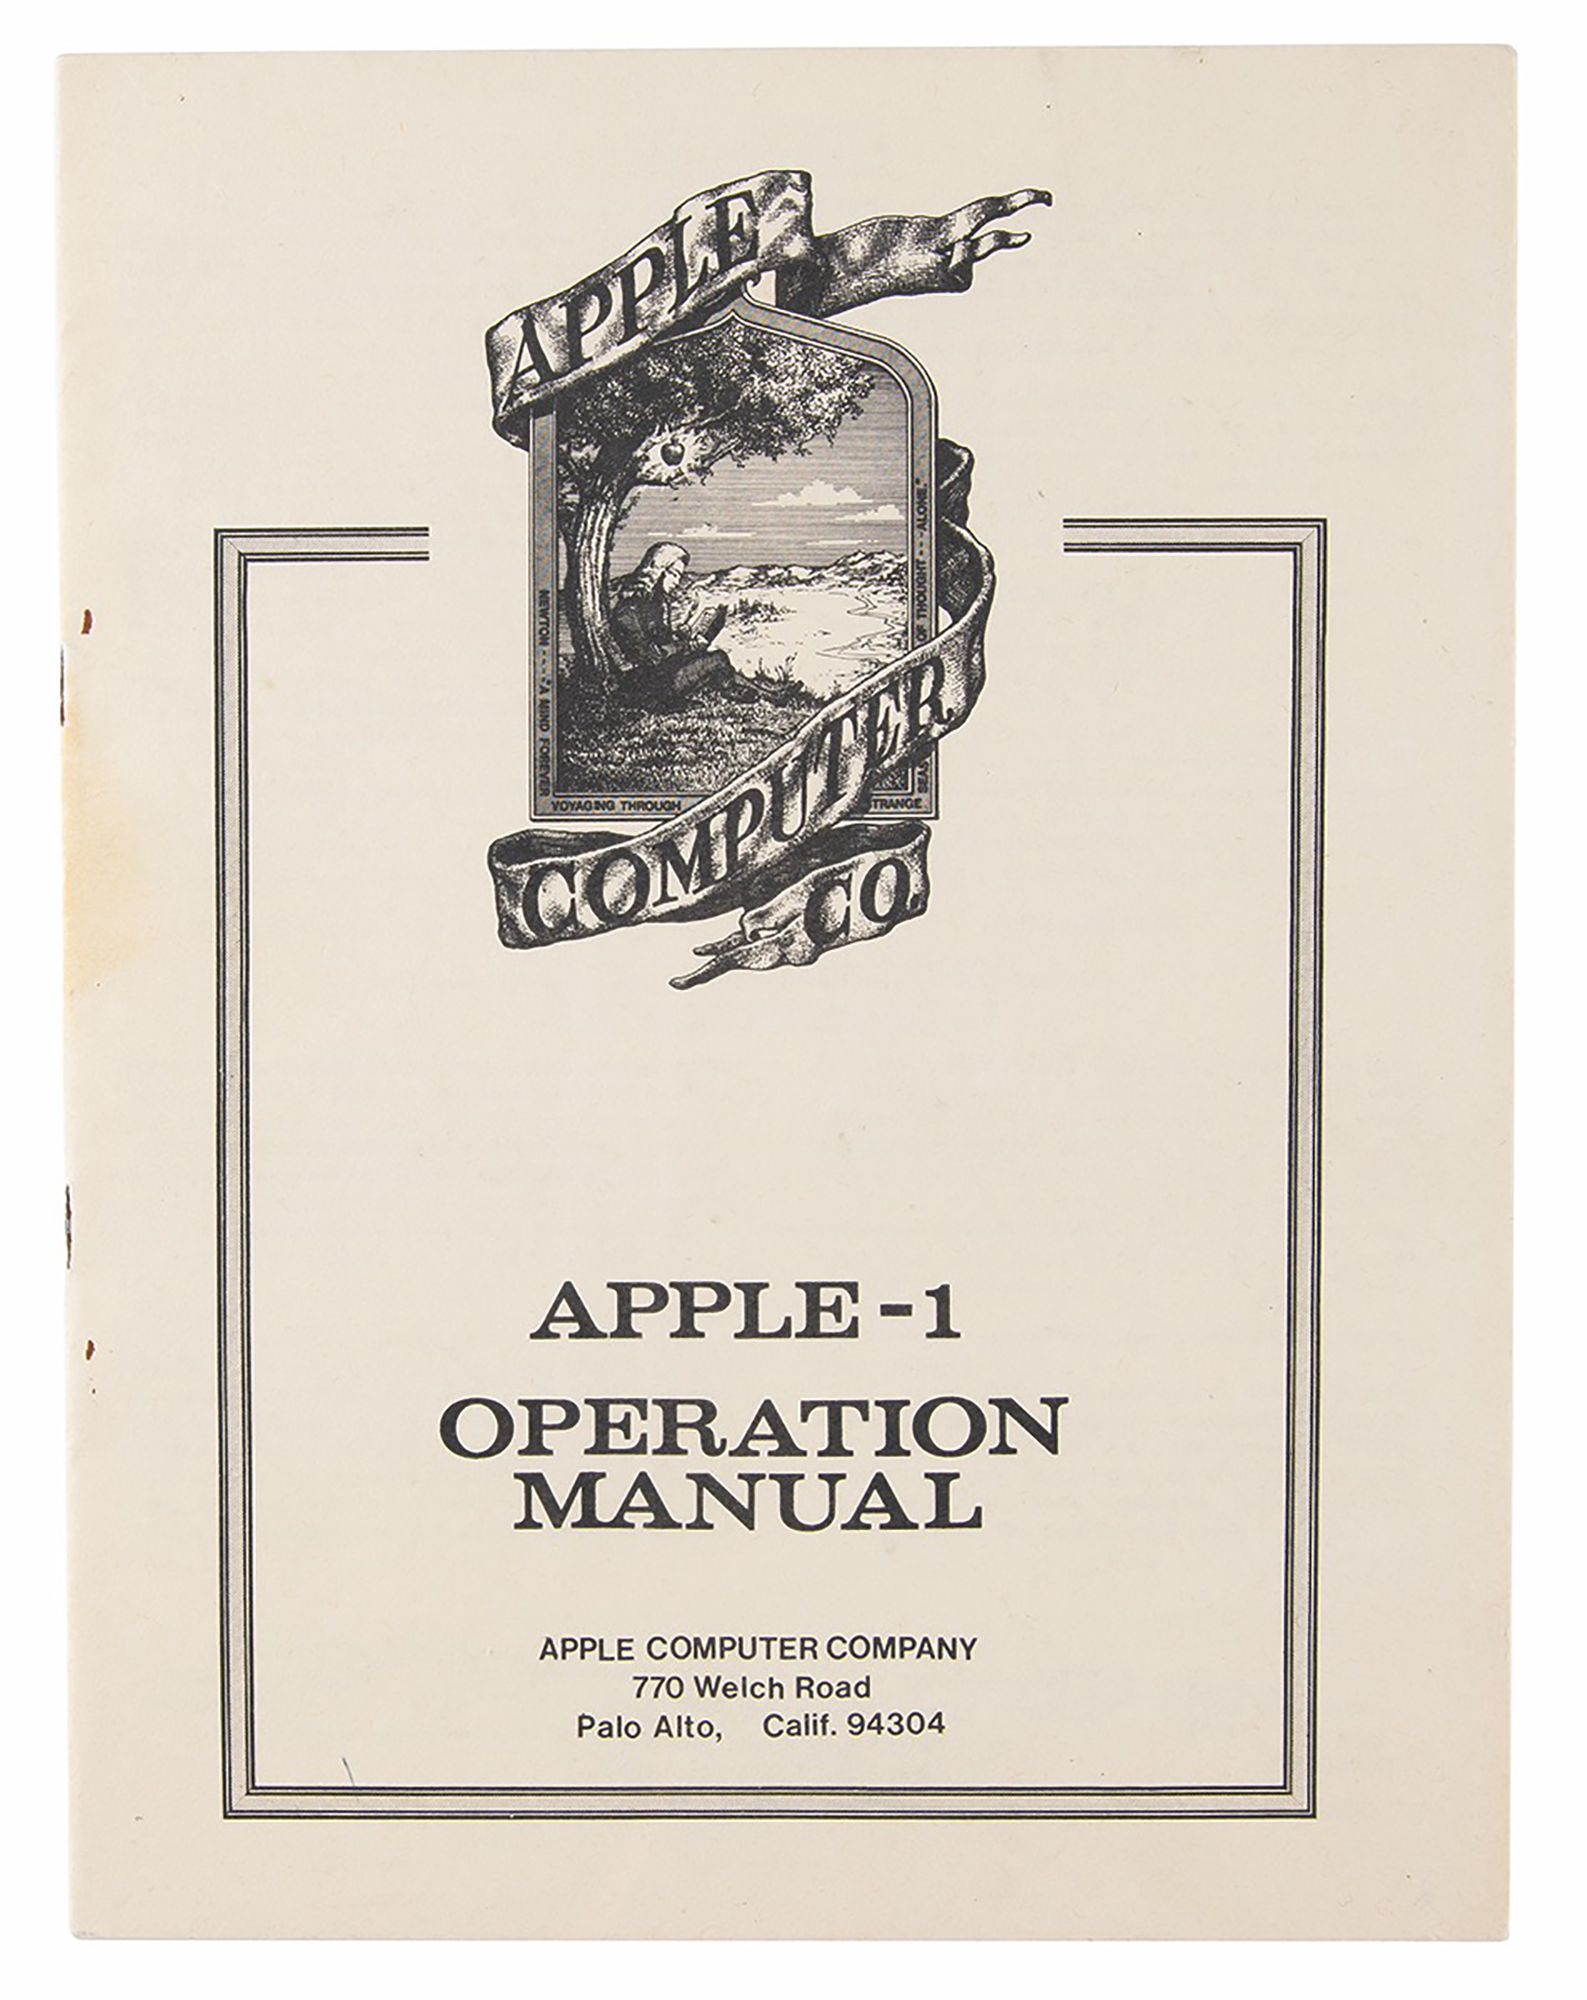 Lot #8025 Apple-1 Computer Operation Manual - Image 1